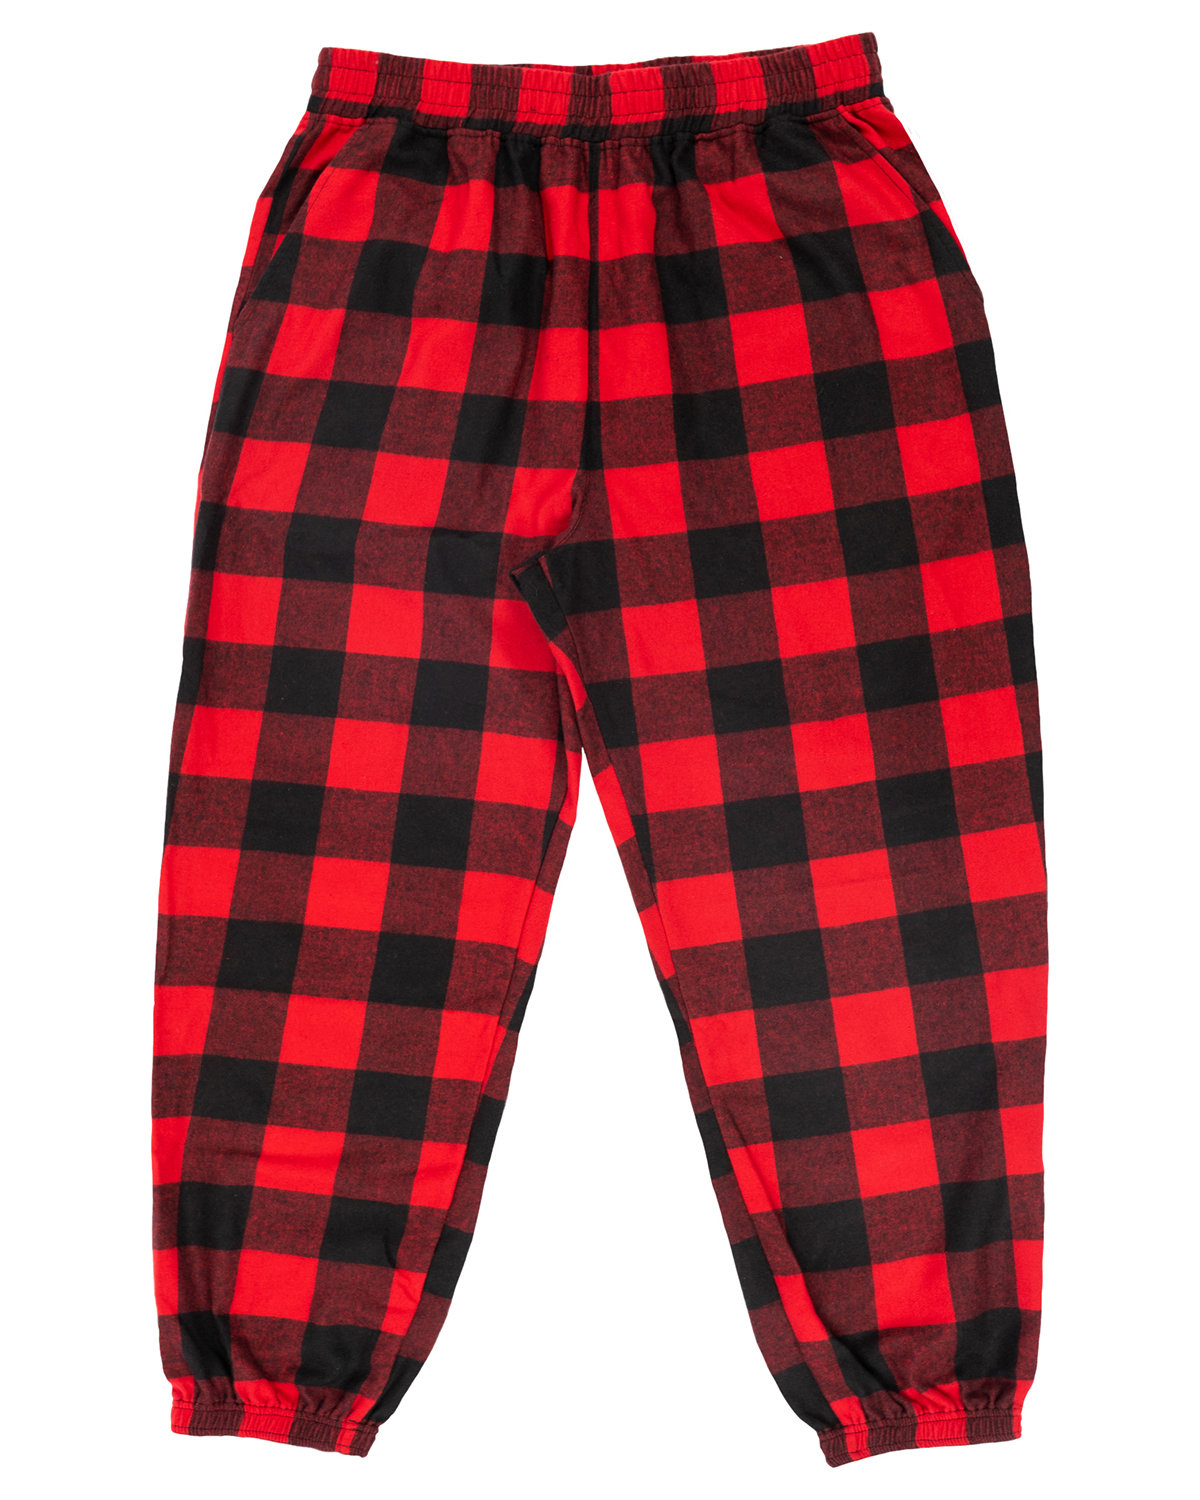 https://images.shirtspace.com/fullsize/o3tcYoP2lXOARxtrZIvwDA%3D%3D/355861/17795-burnside-b8810-unisex-flannel-jogger-front-red-black.jpg